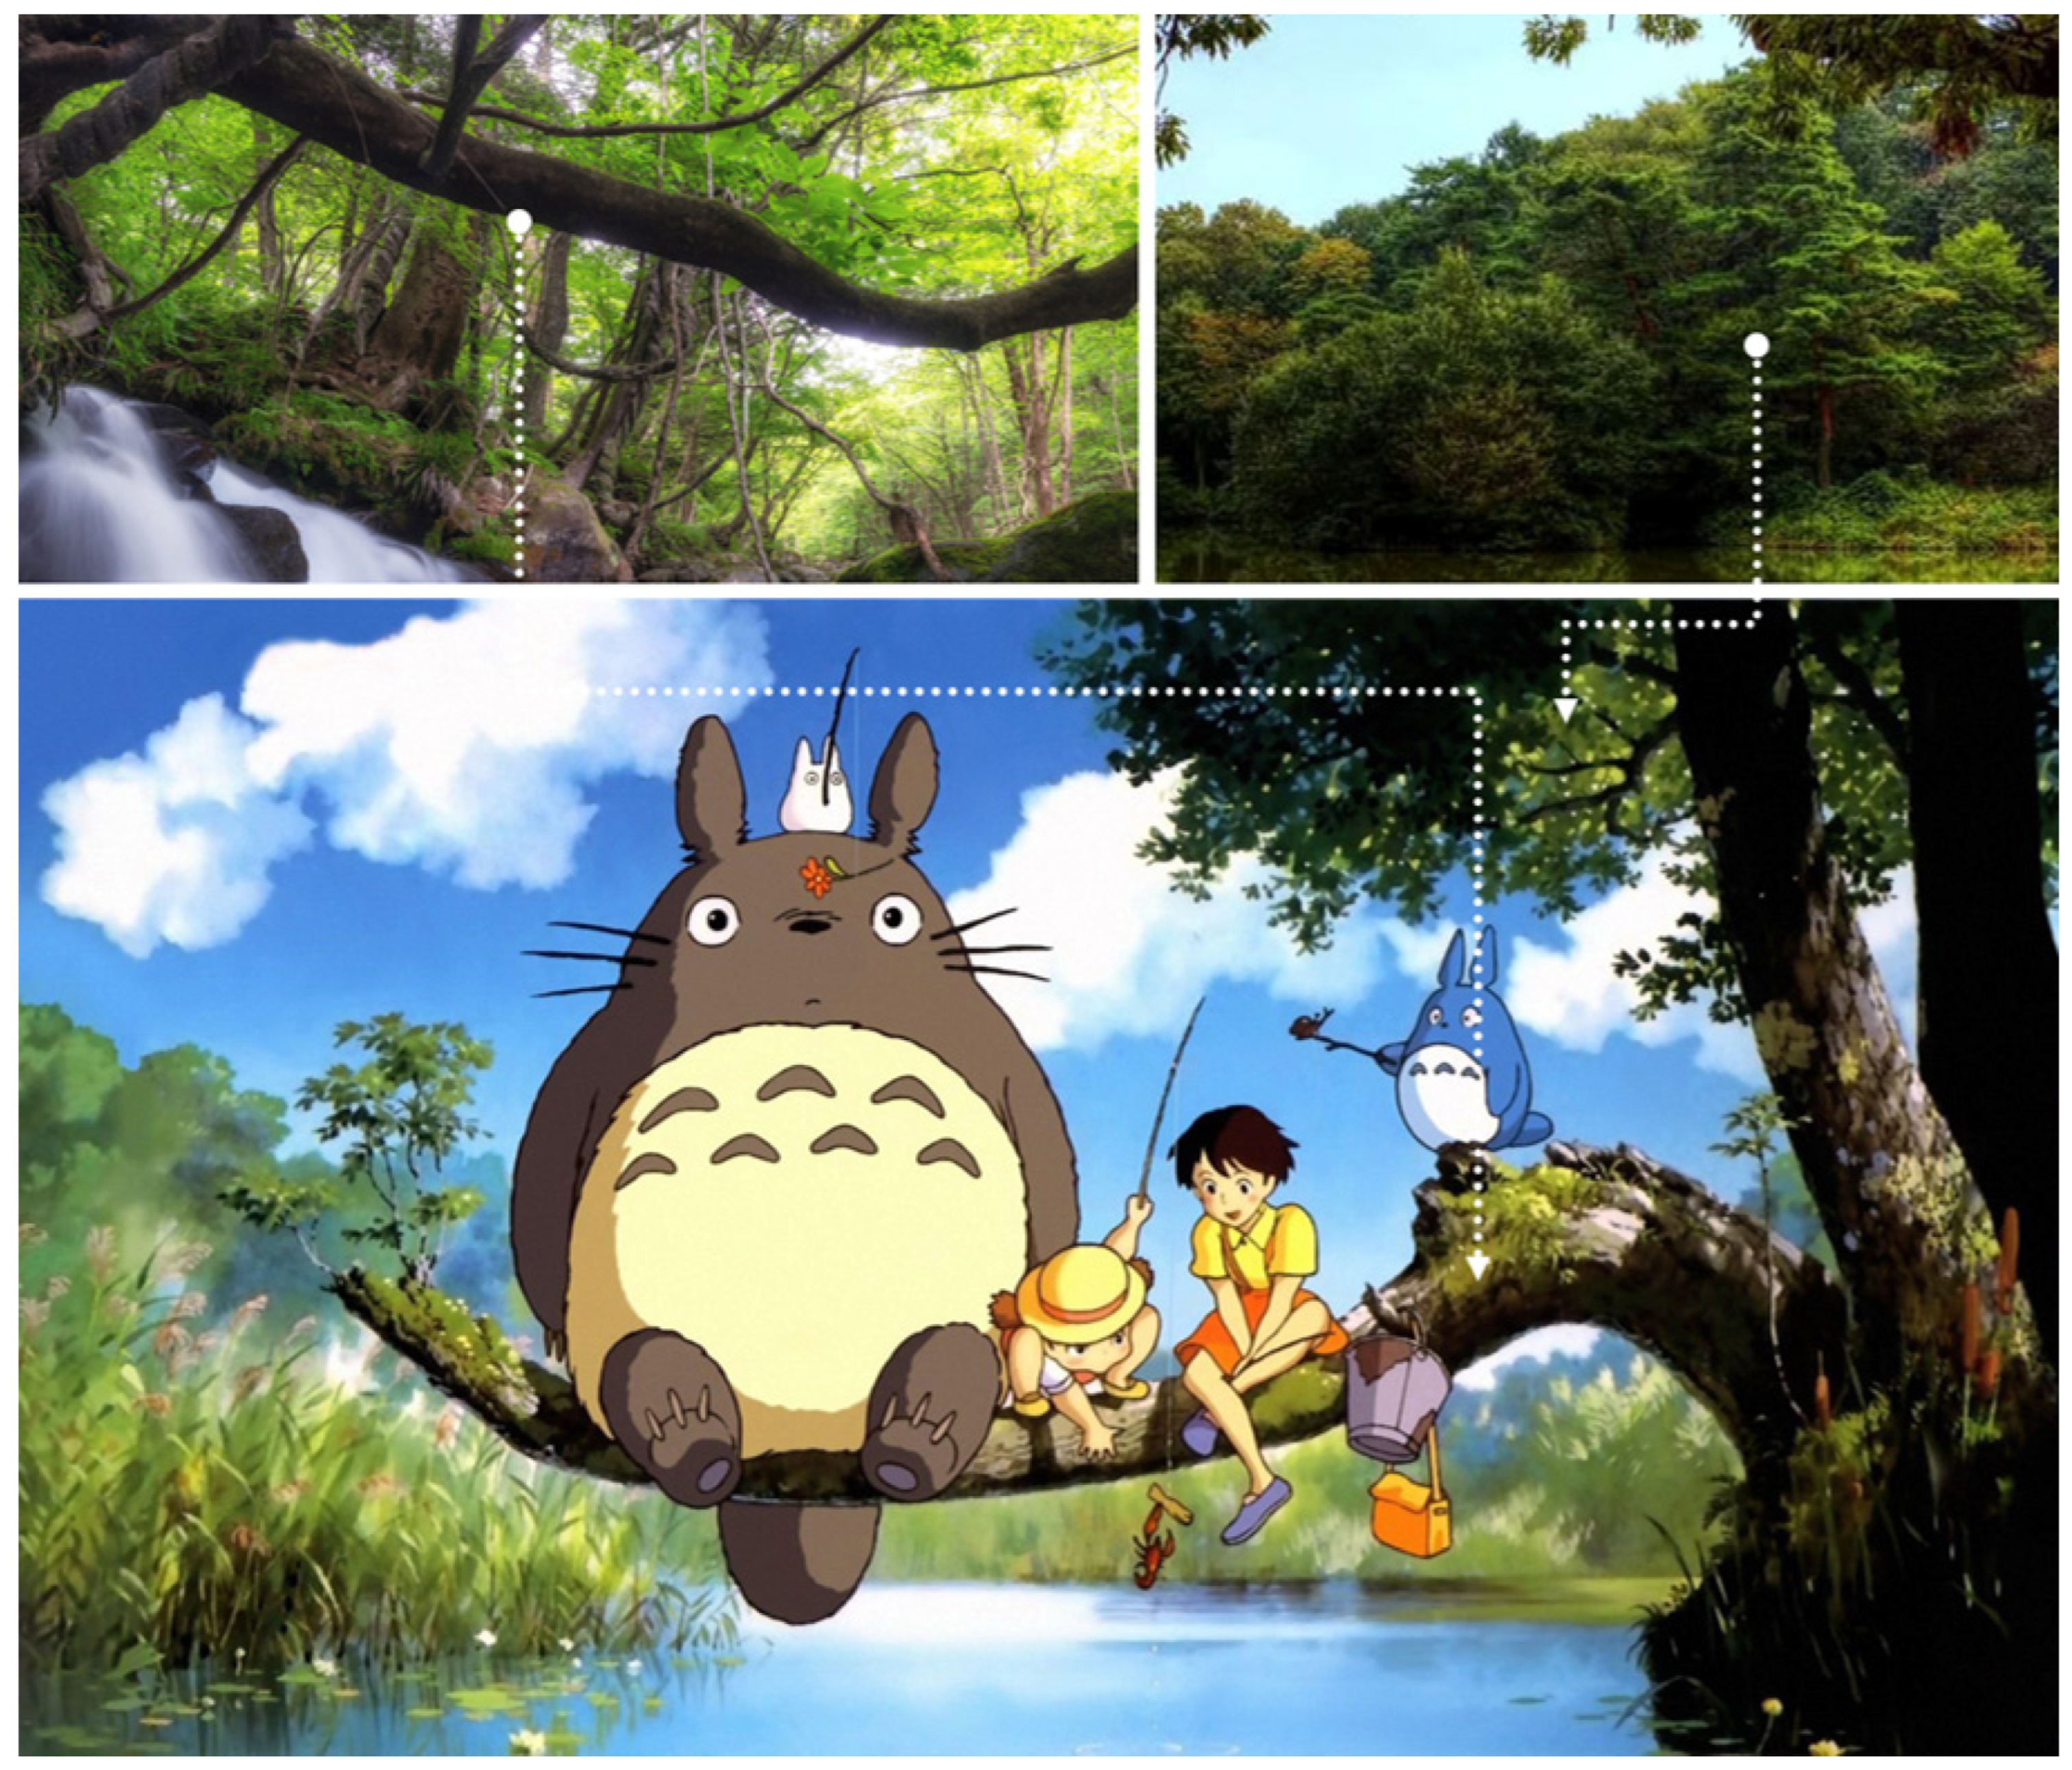 Ecological magic in My Neighbor Totoro